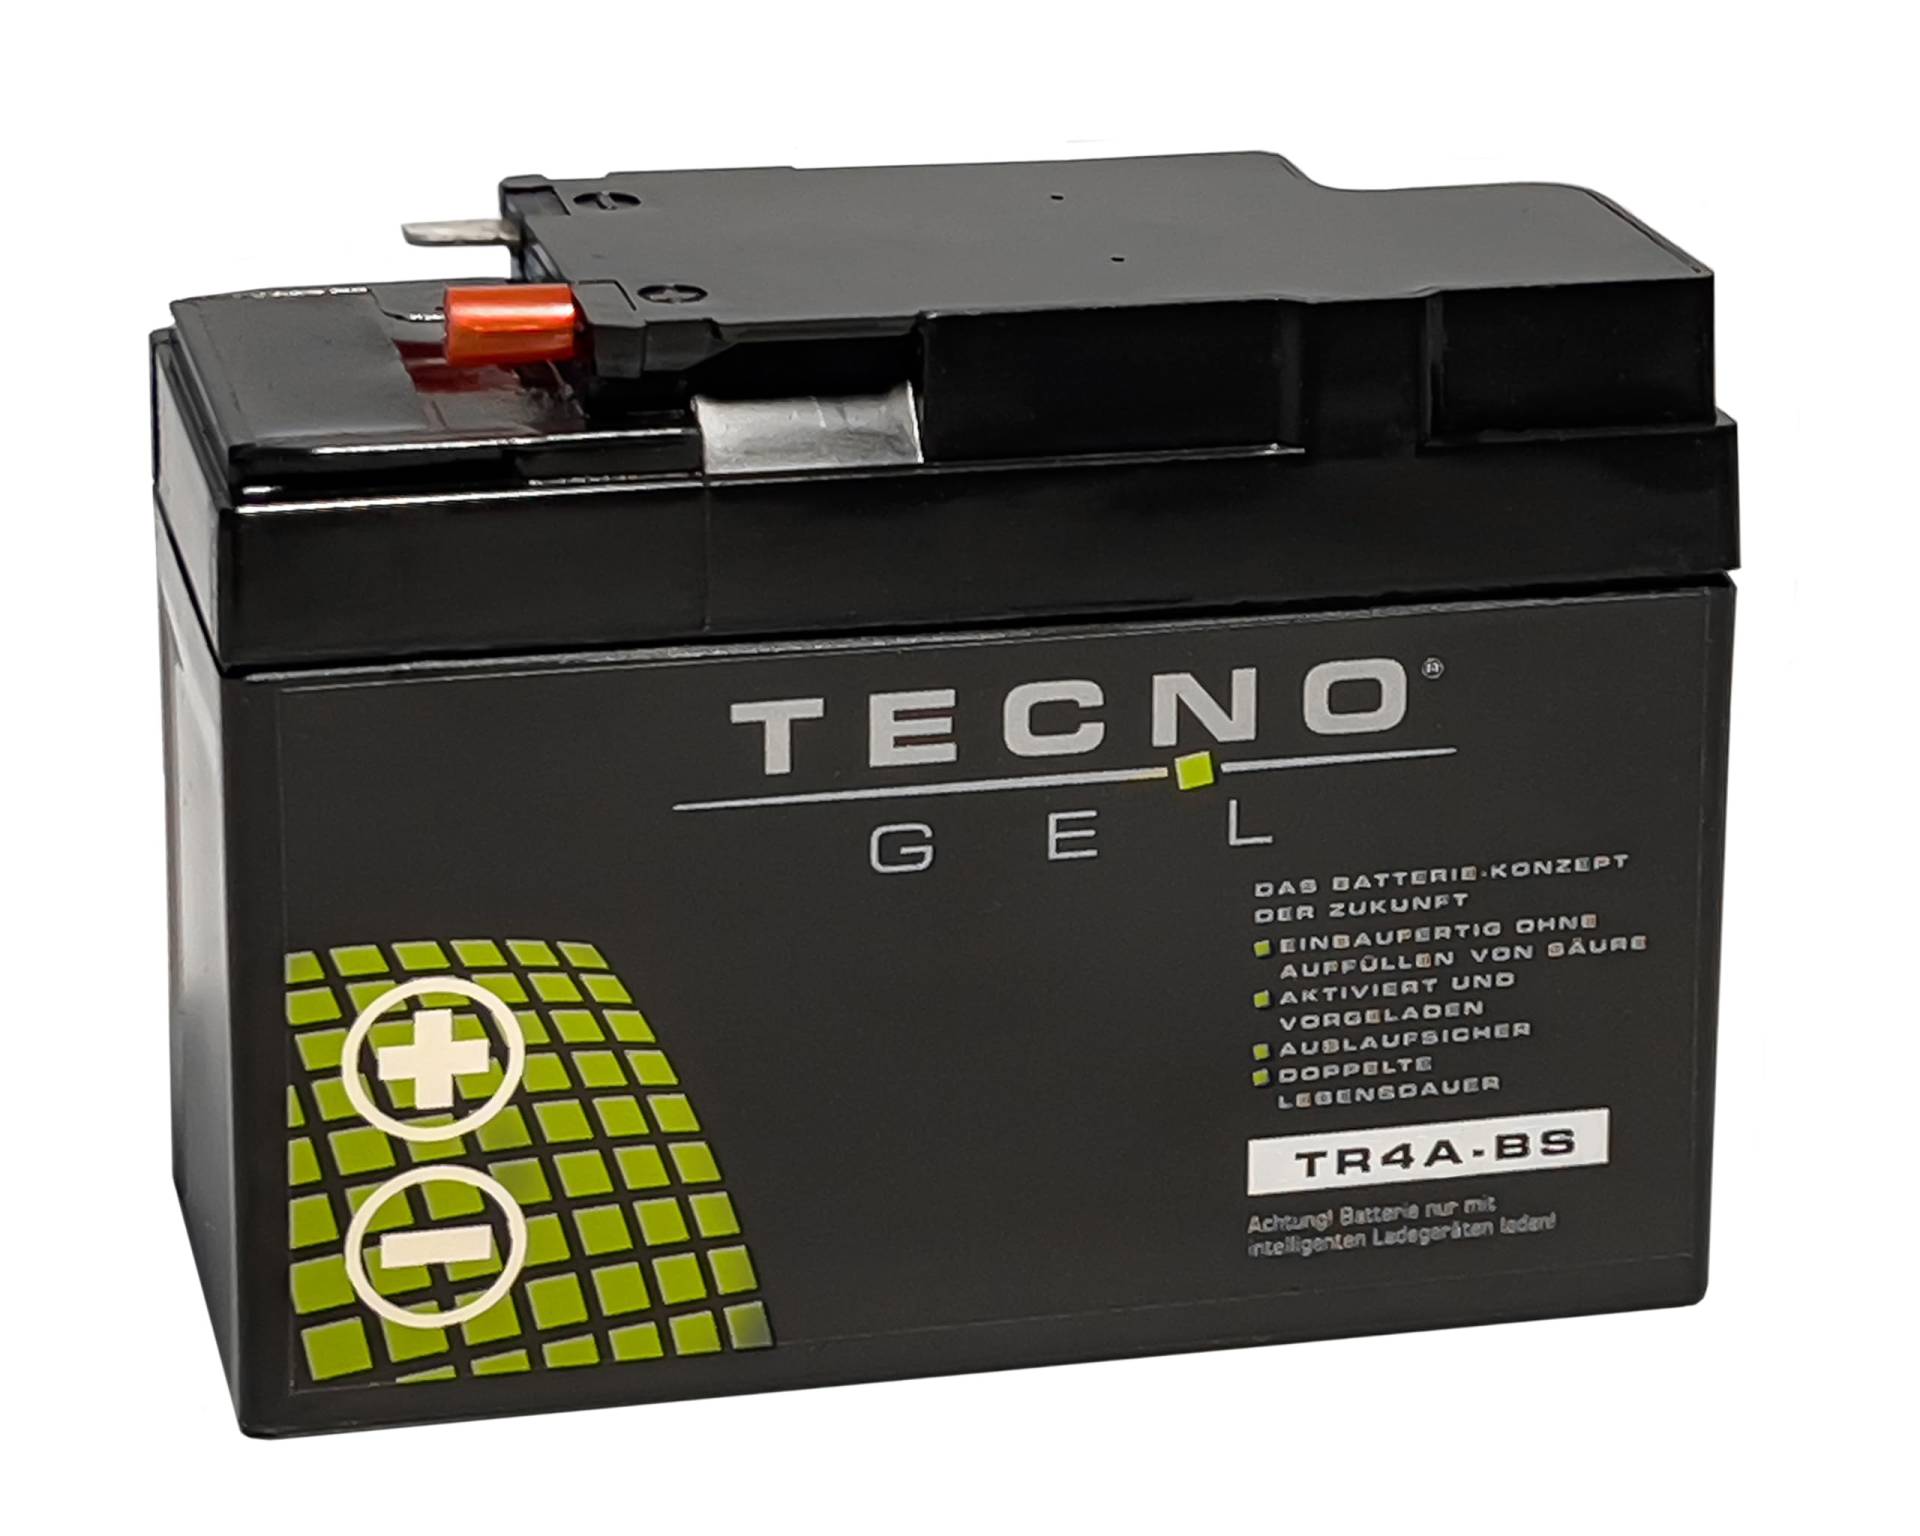 TECNO-GEL Motorrad-Batterie für YTR4A-BS, 12V Gel-Batterie 2,3 Ah, 112x48x88 mm von Wirth-Federn